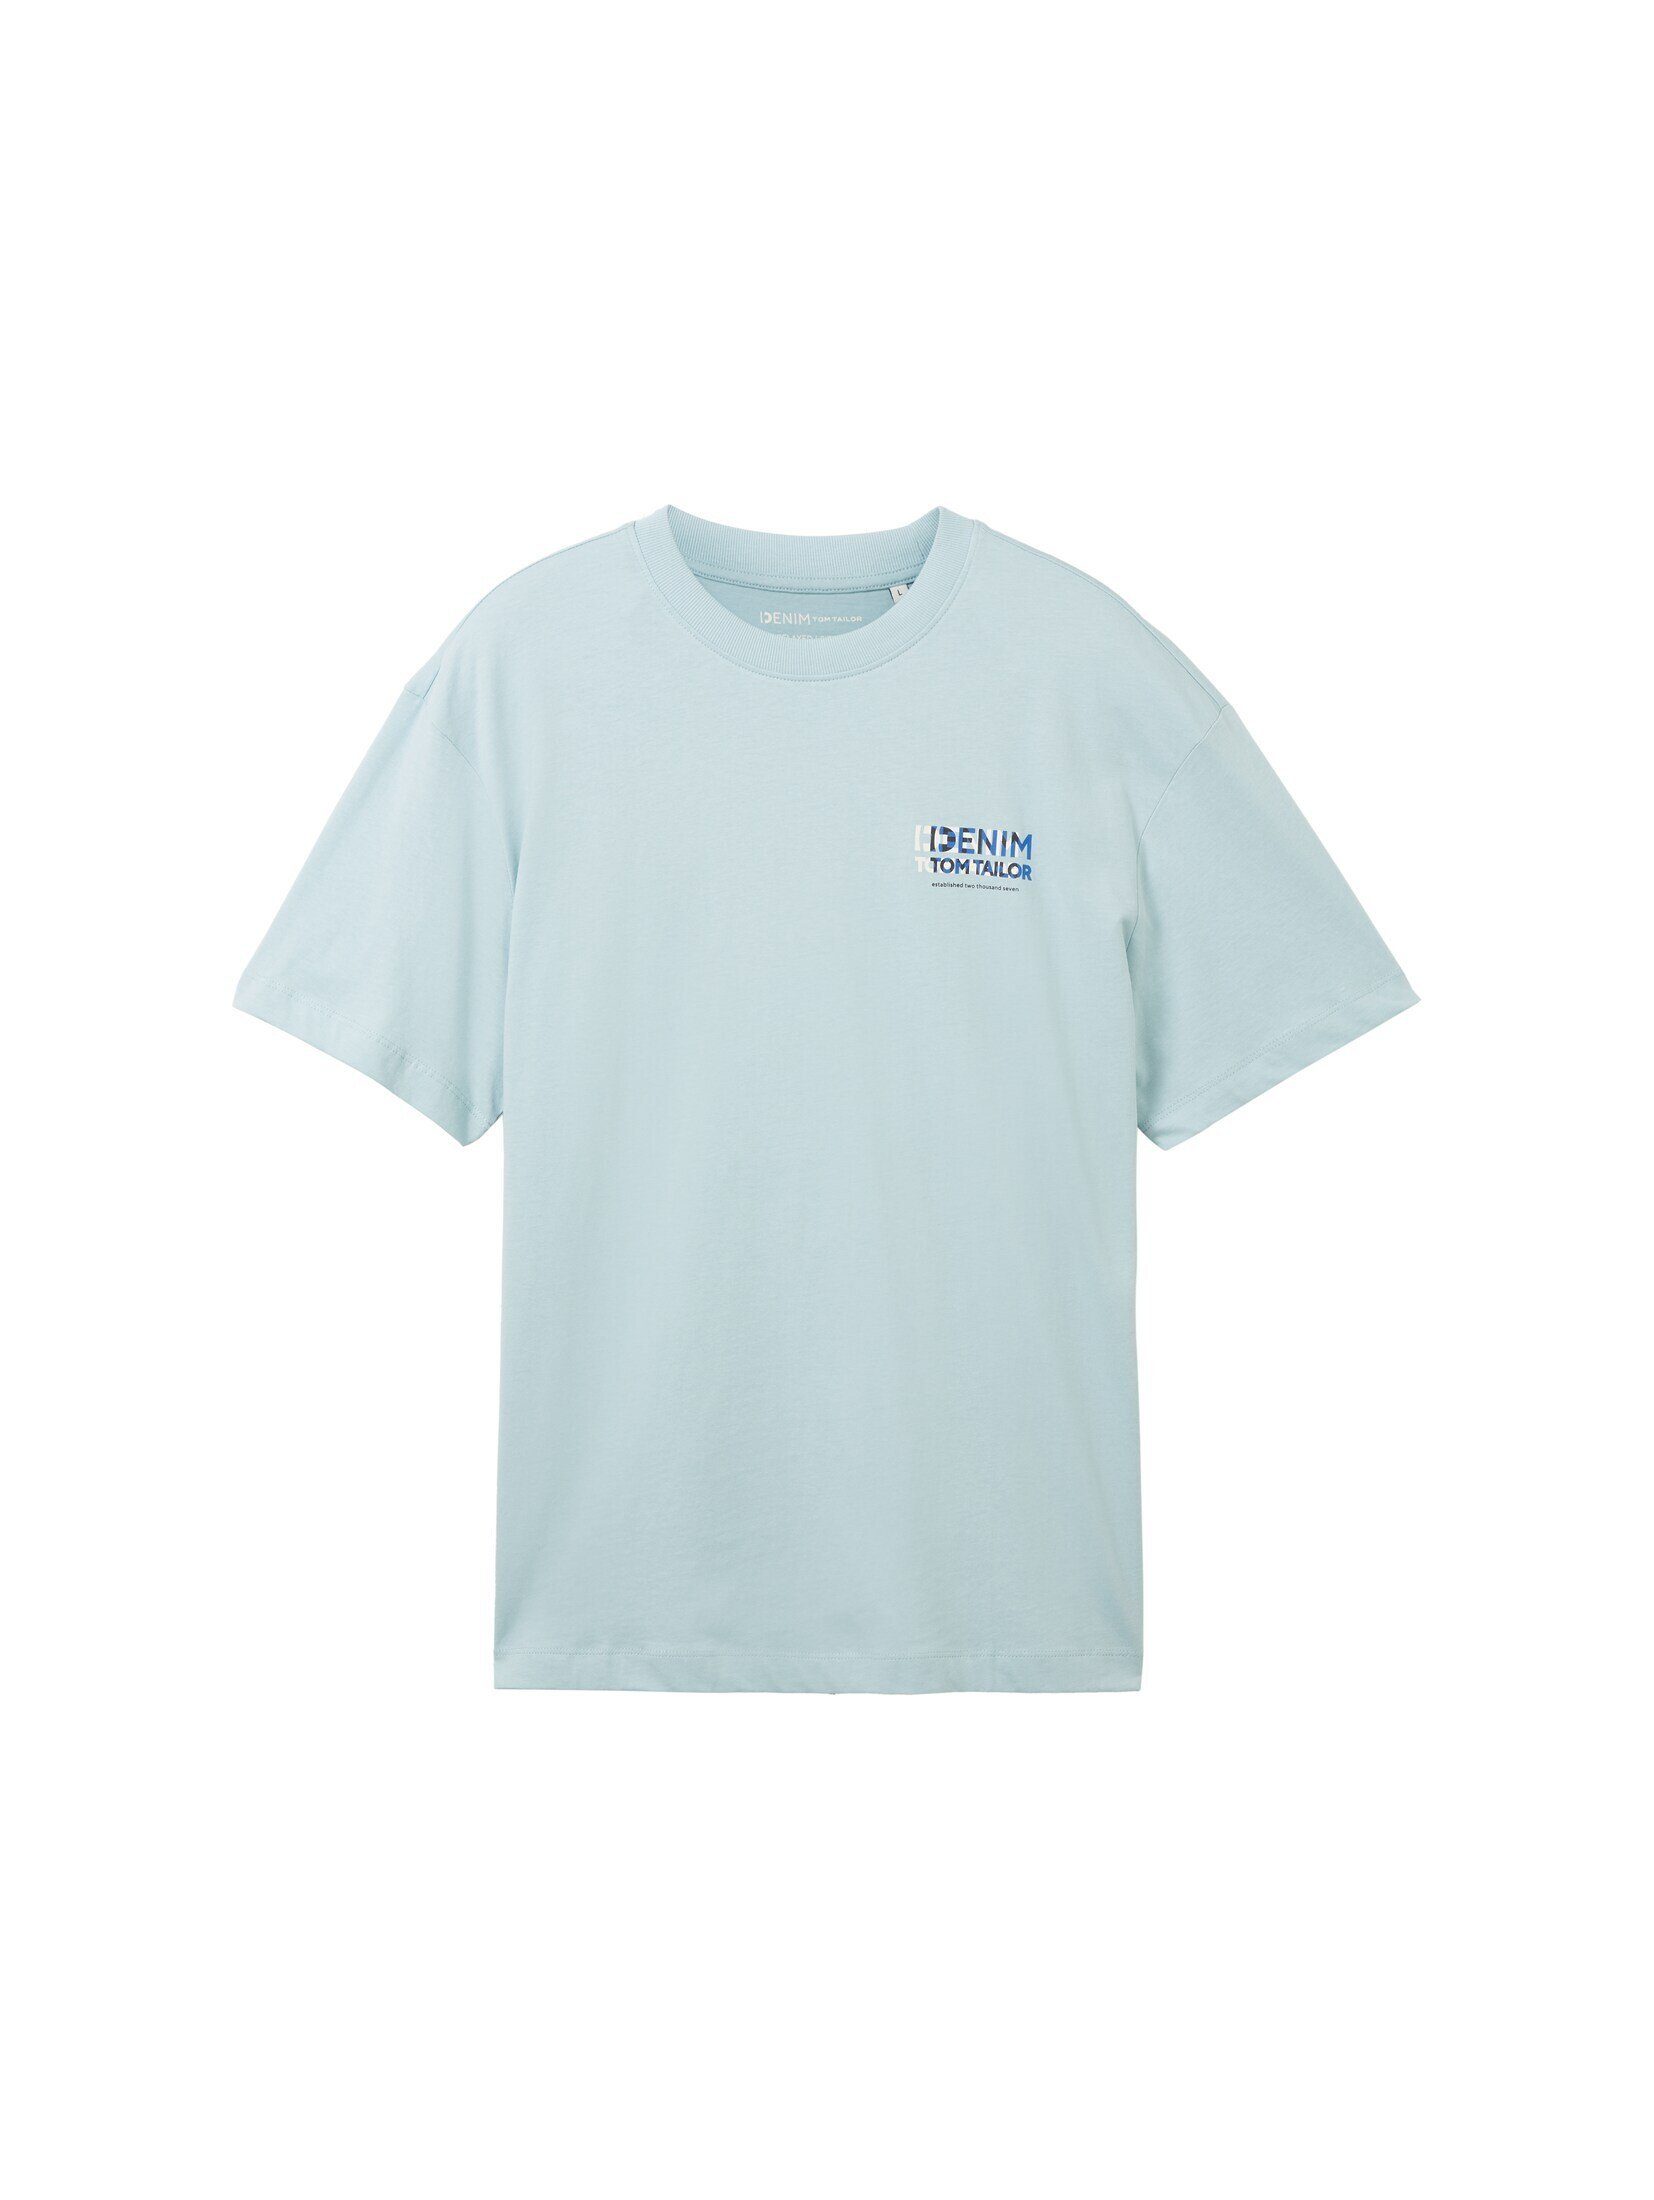 TOM TAILOR Denim T-Shirt dusty mit mint blue Bio-Baumwolle T-Shirt